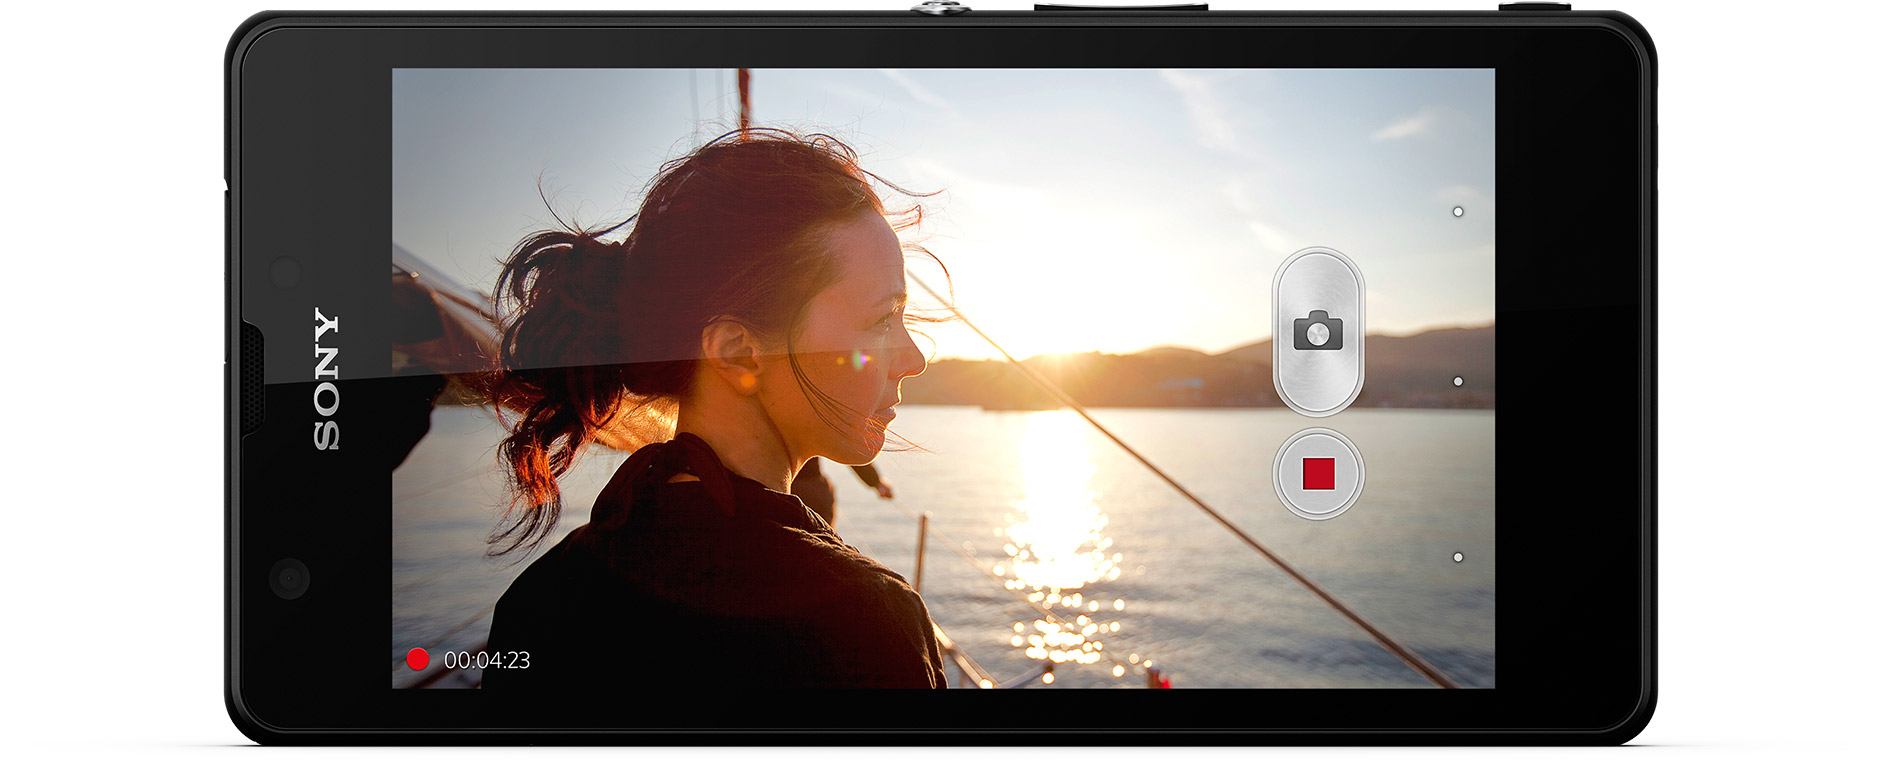 Sony Xperia ZR Full HD video recording.